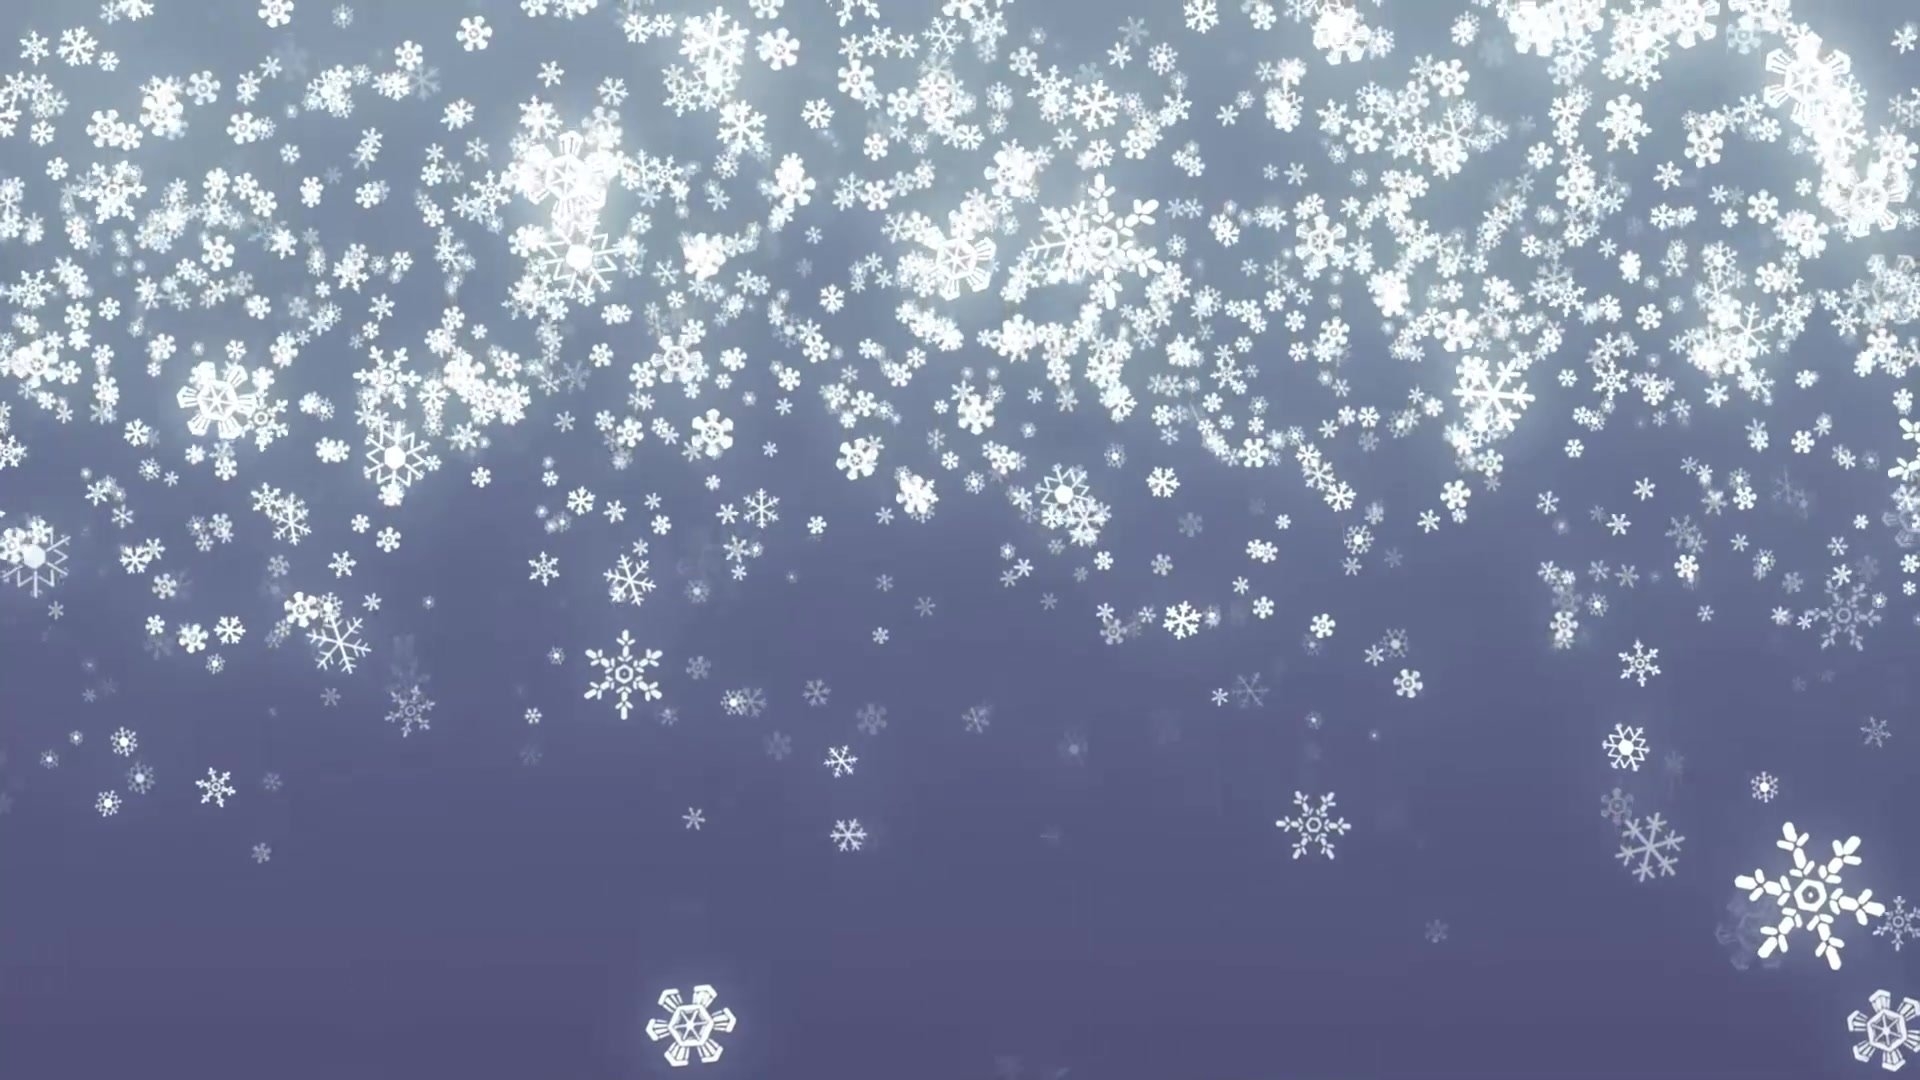 Снежинки падая с неба кружатся. Снежинки падают. Падающий снег. Снег анимация. Снежинки снегопад.